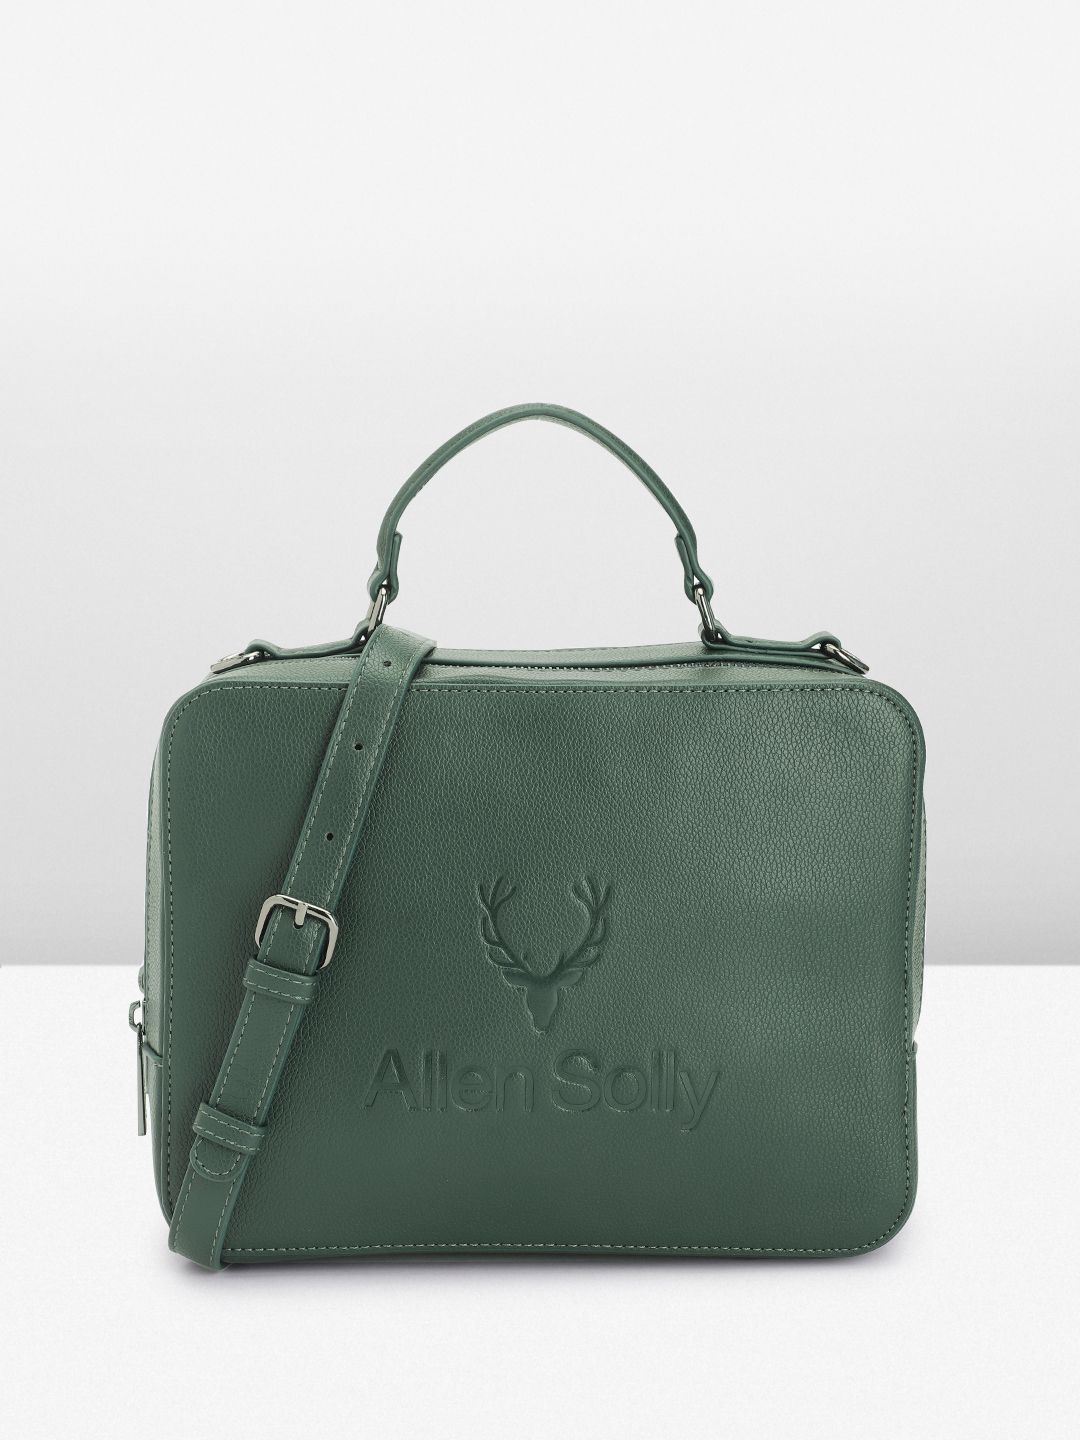 Allen Solly Brand Logo Debossed Design Handheld Bag